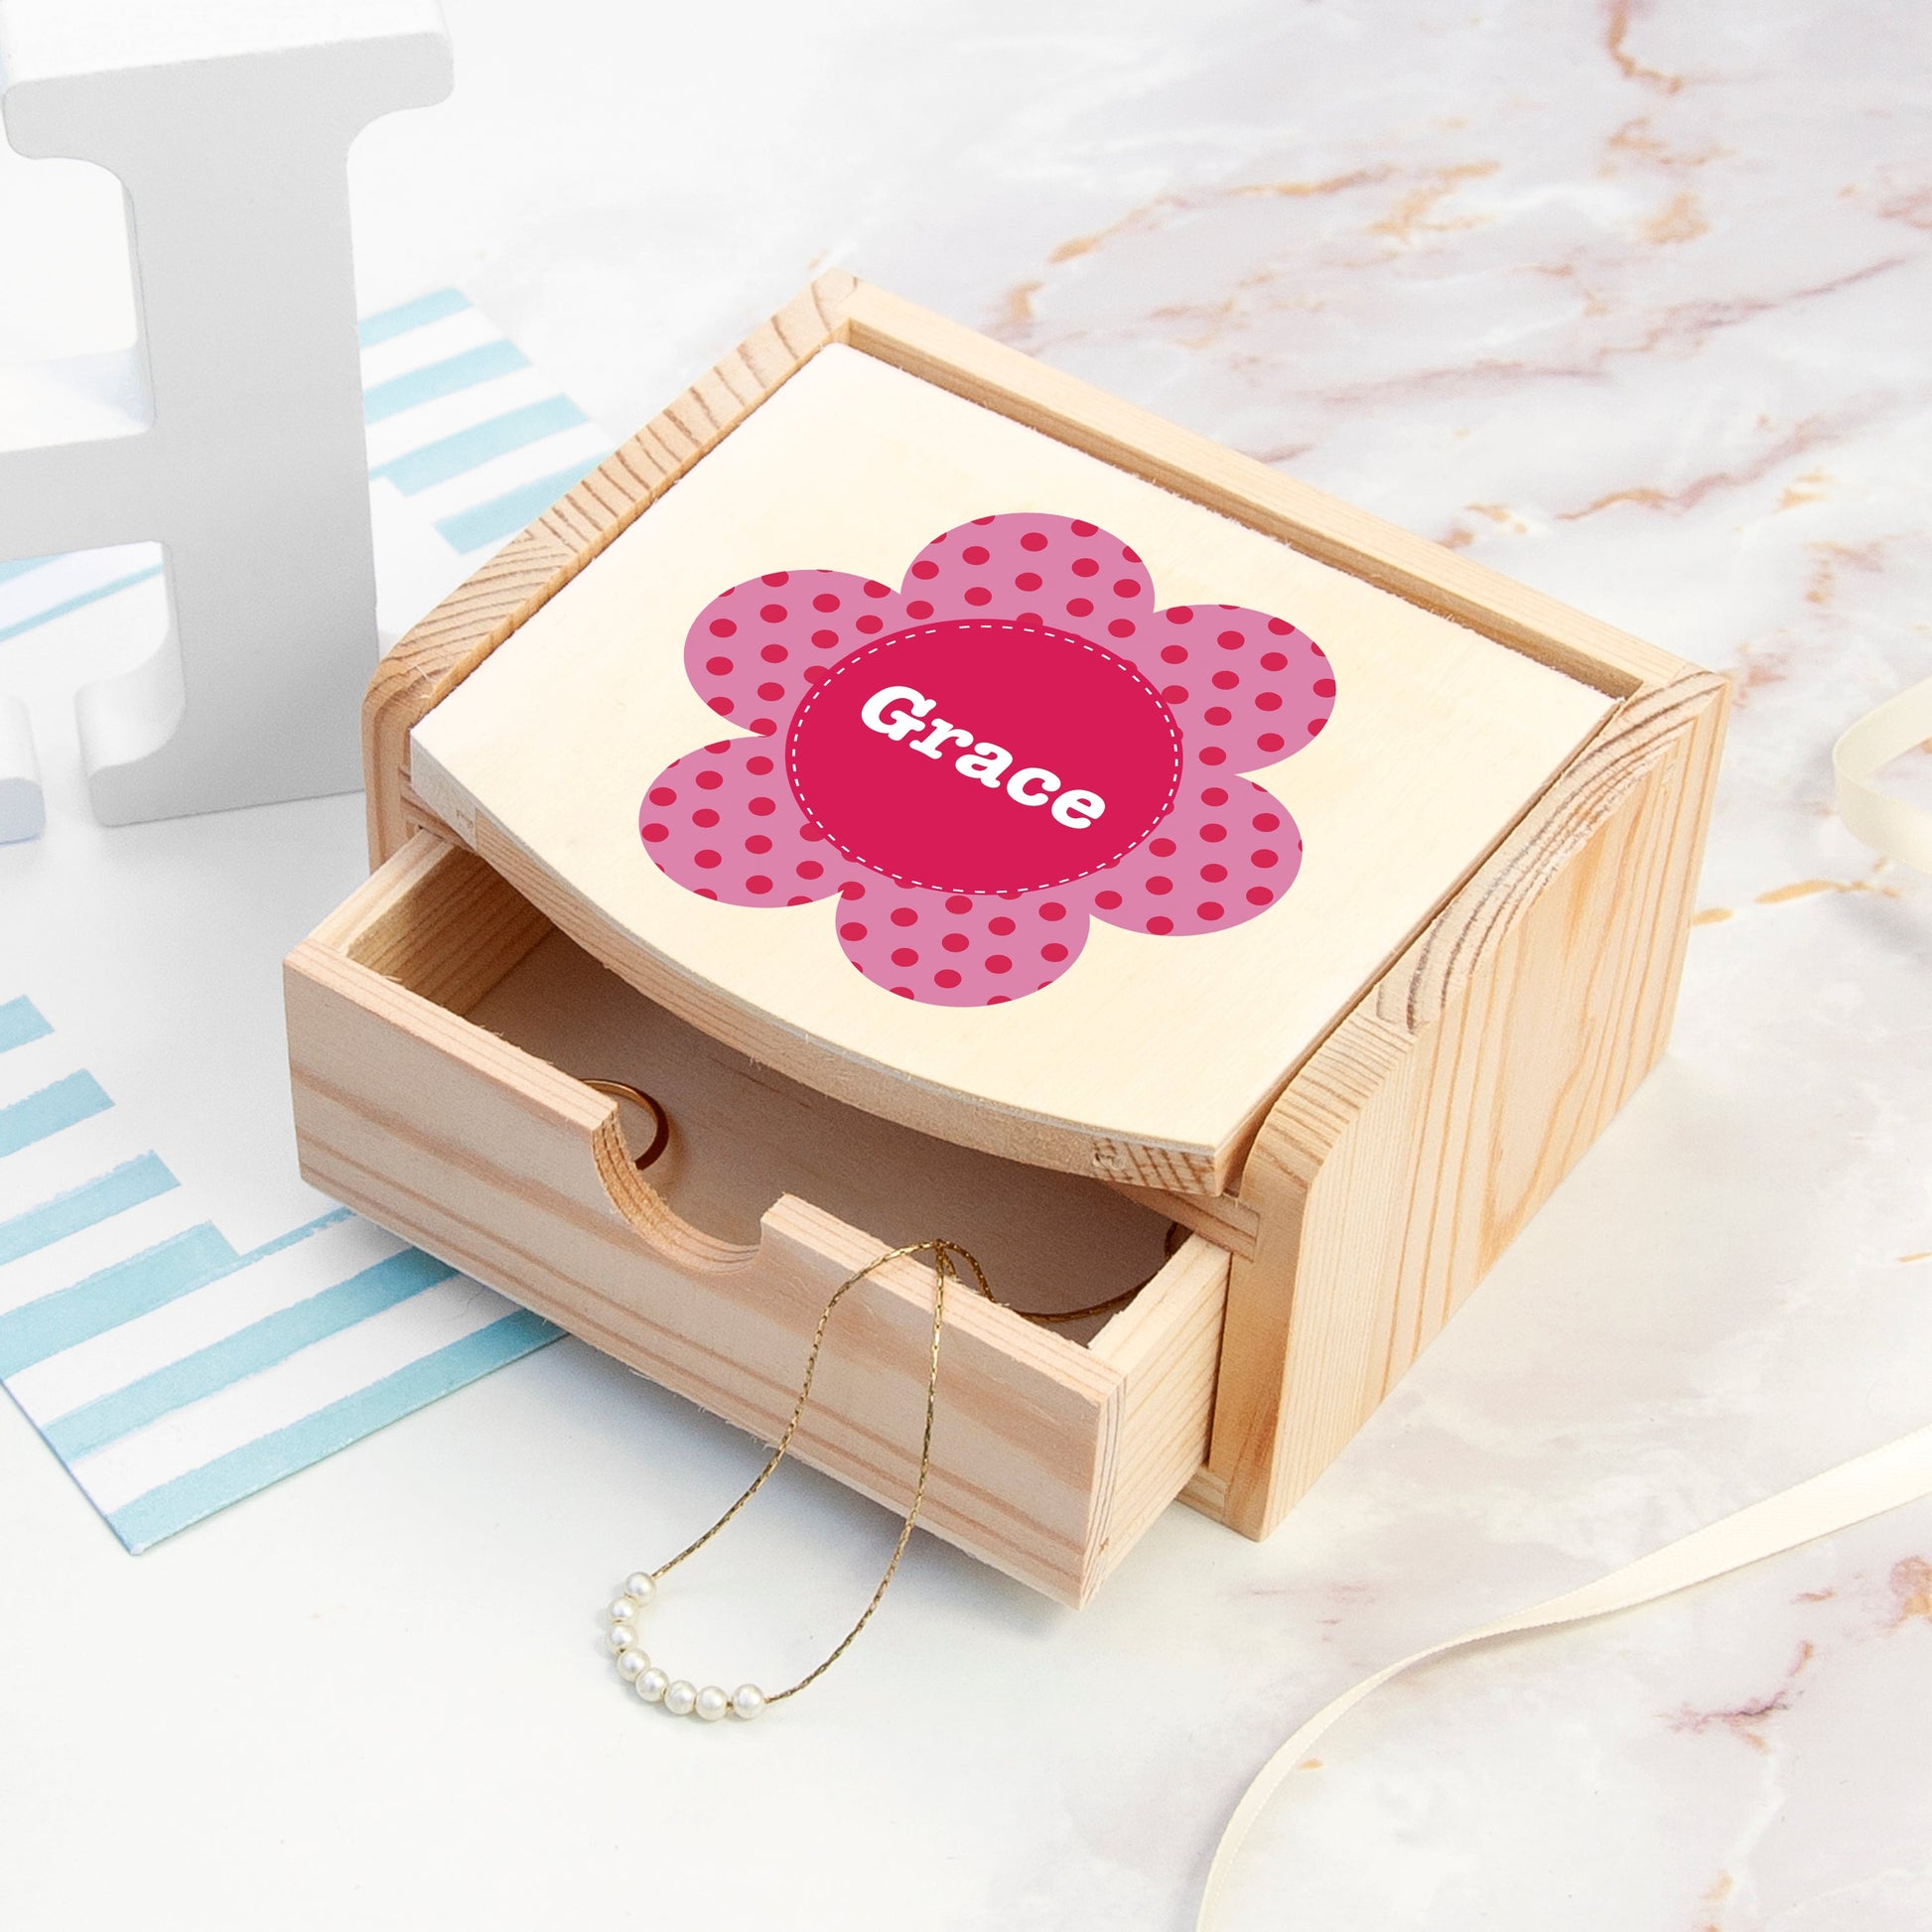 Personalized Jewellery Boxes & Storage - Personalized Kid’s Flower Jewellery Box 